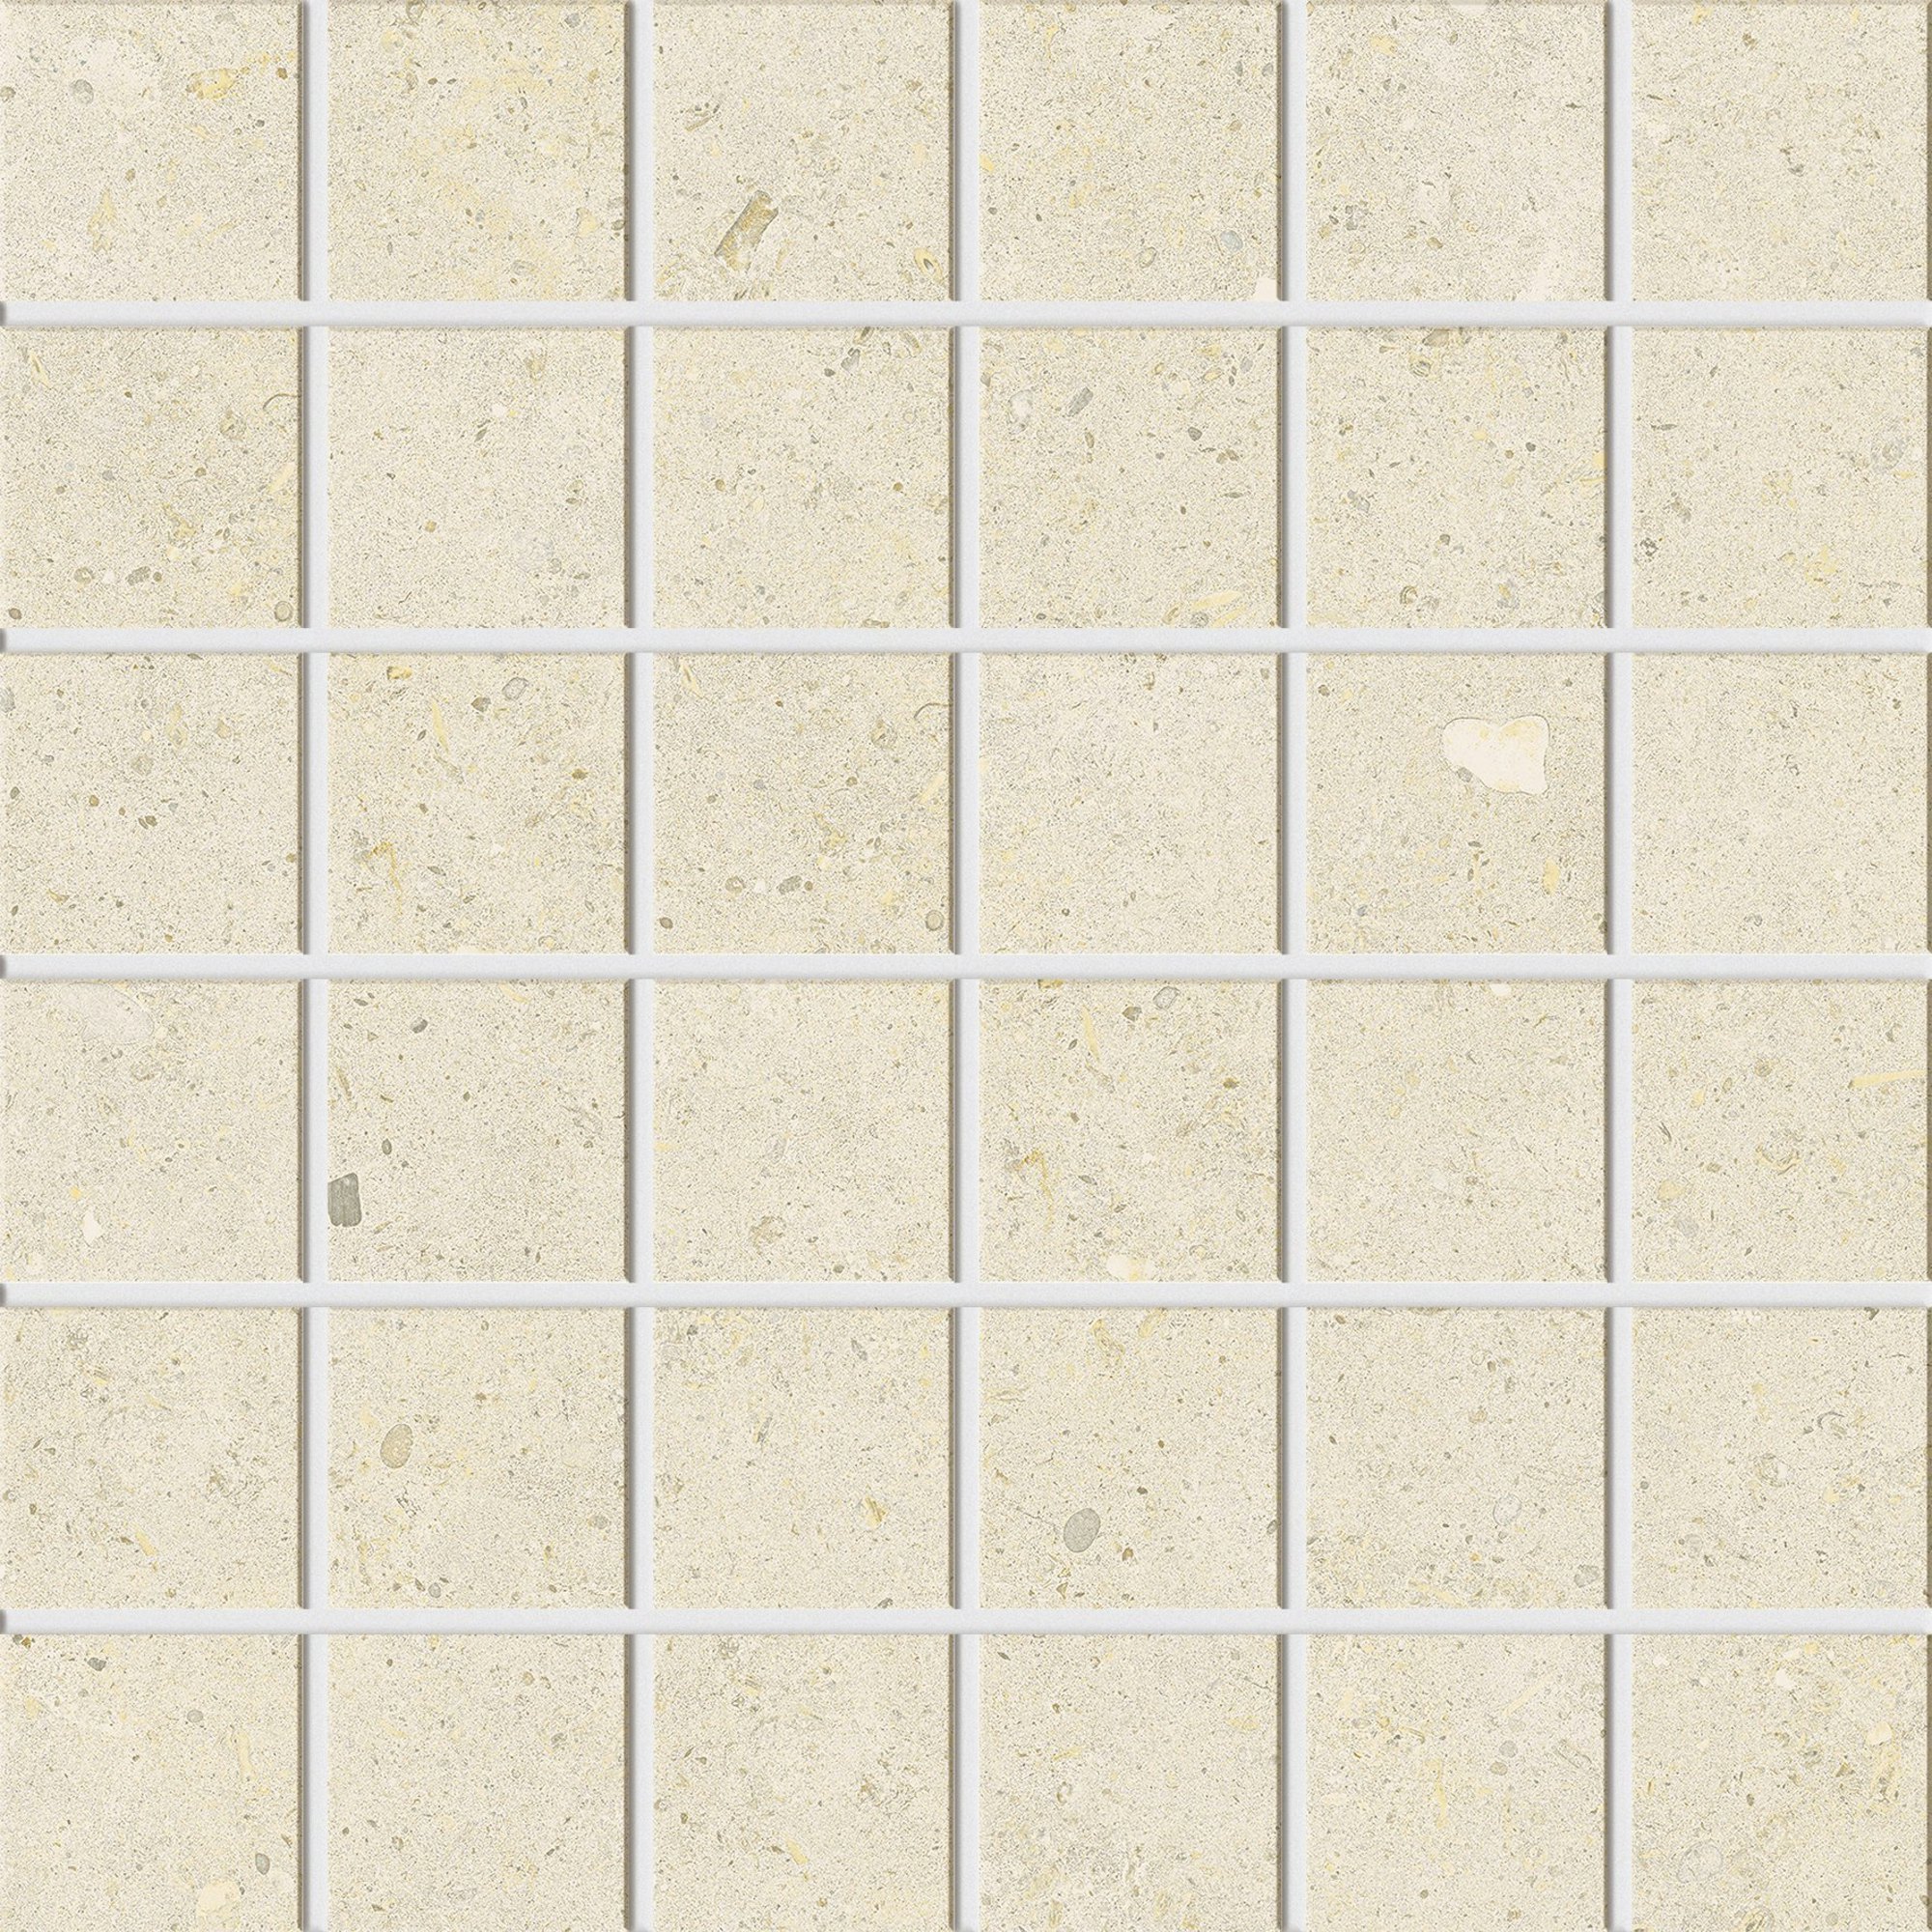 Coolstone White Mosaic tile